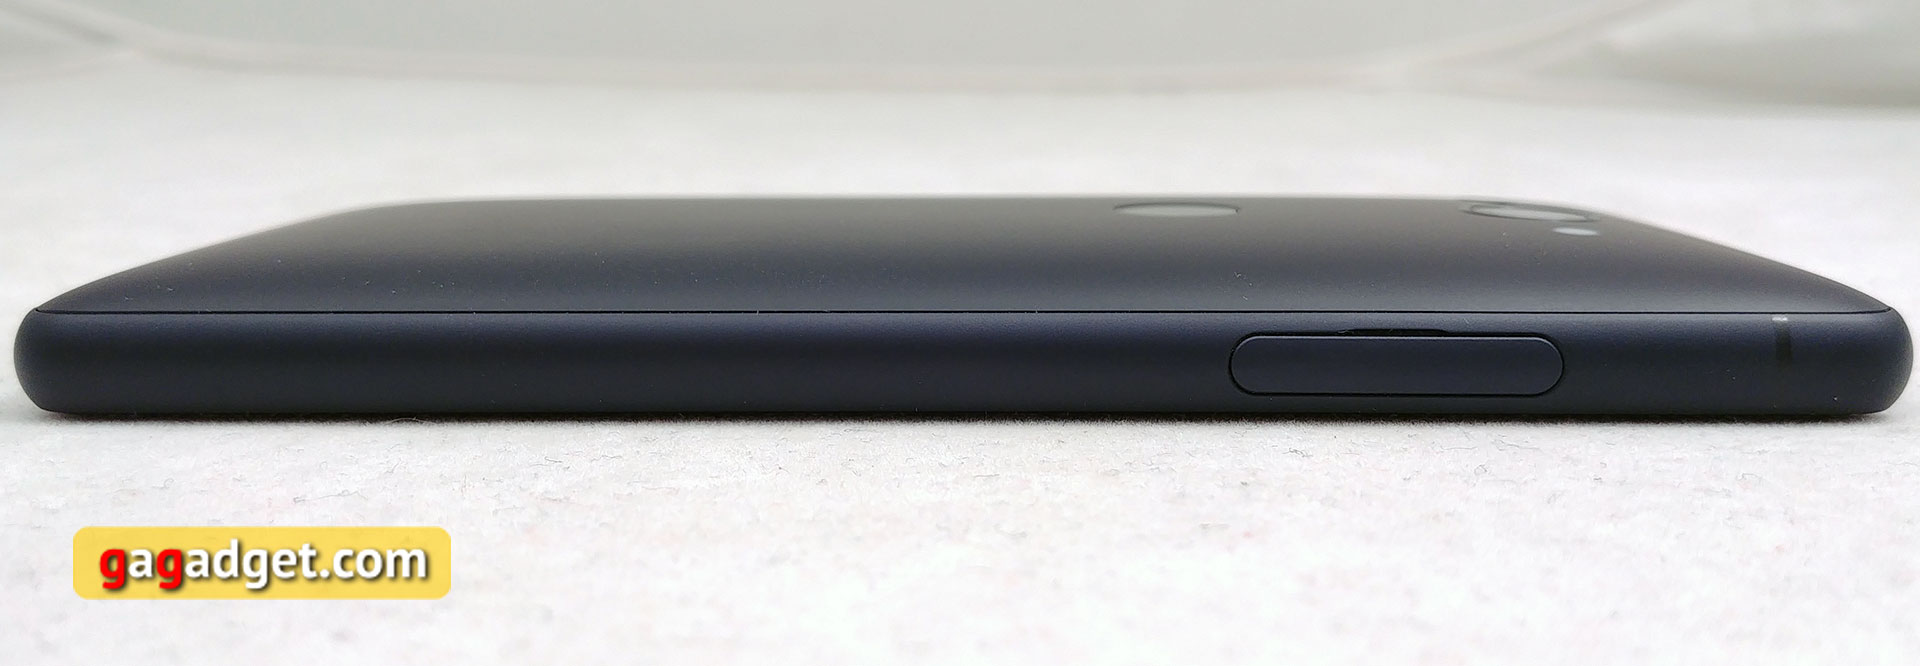 Обзор Sony Xperia XZ2 Compact: неукротимая сила в компактном формате-8